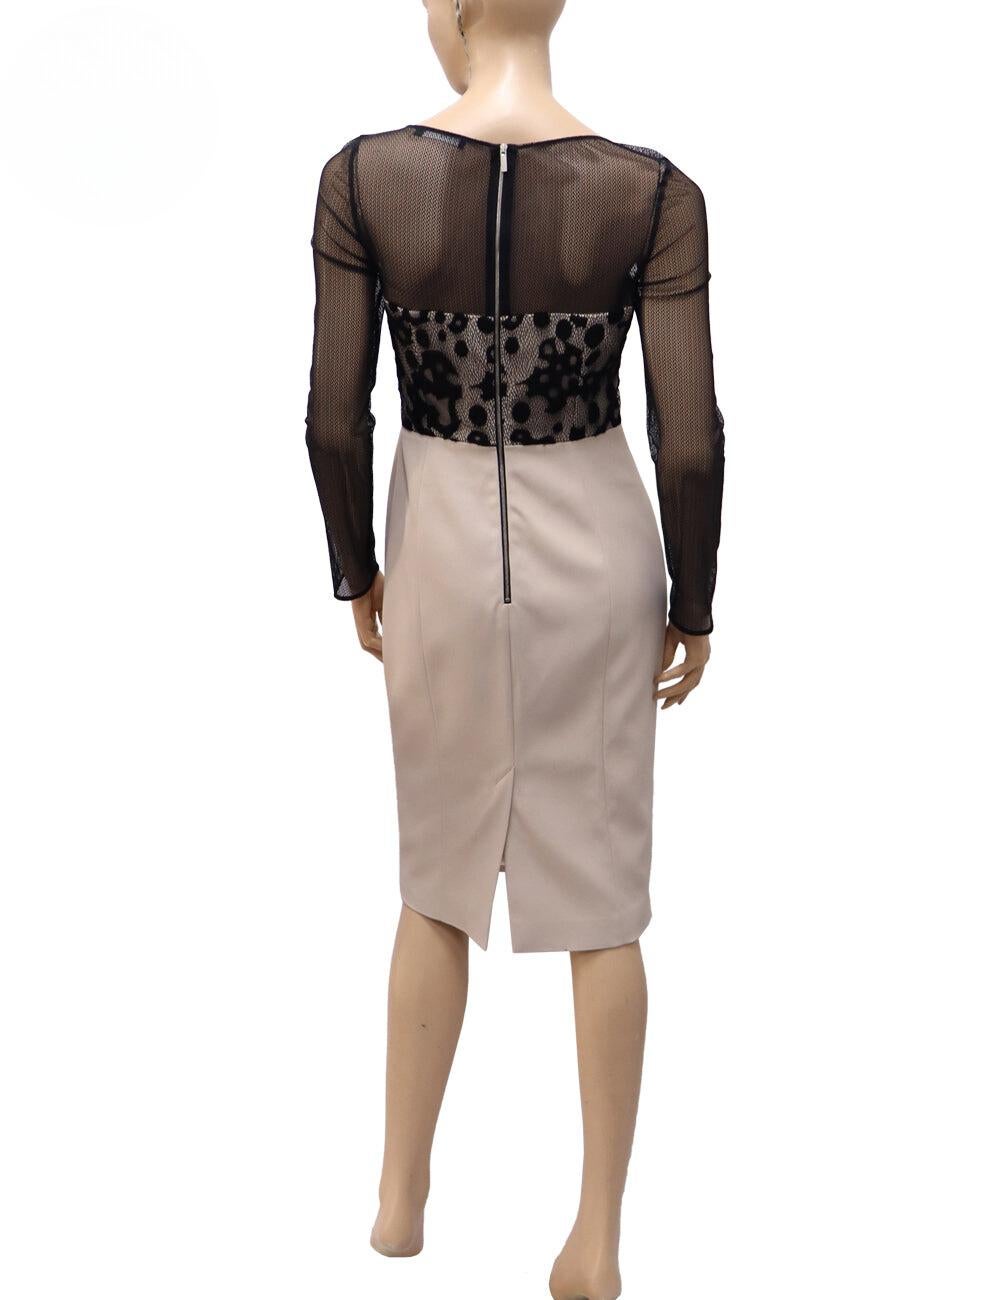 Karen Millen Fishnet Overlay Sheath Dress Size UK 12 In Good Condition For Sale In Amman, JO